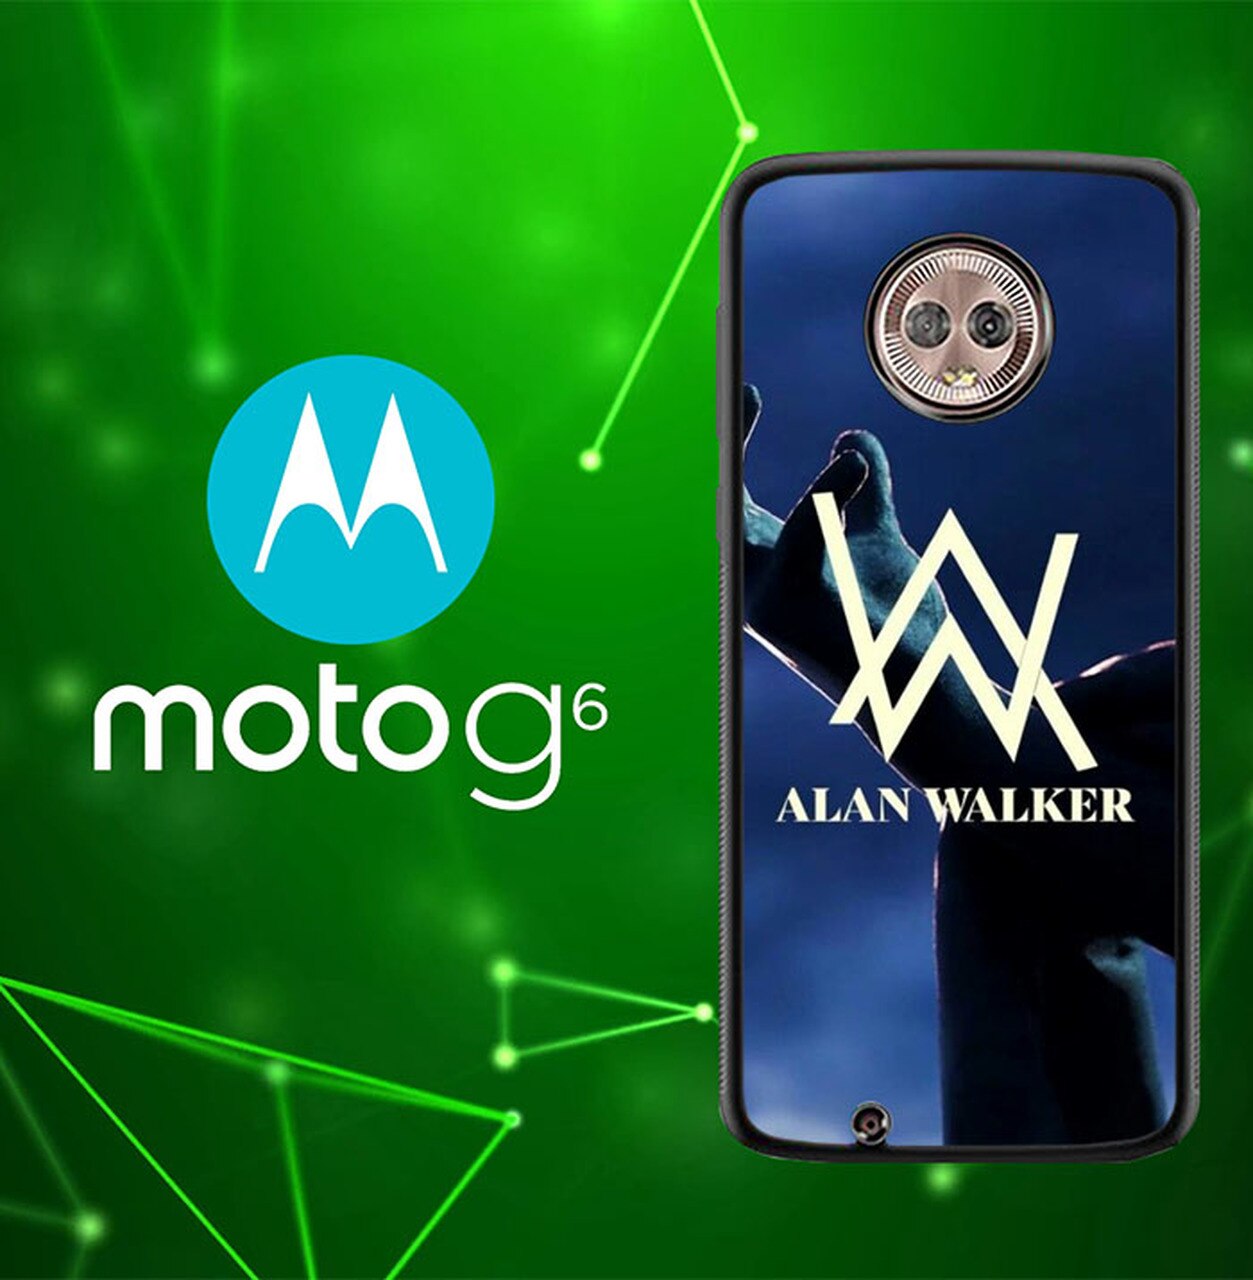 Bts Motorola G6 Phone Case - HD Wallpaper 